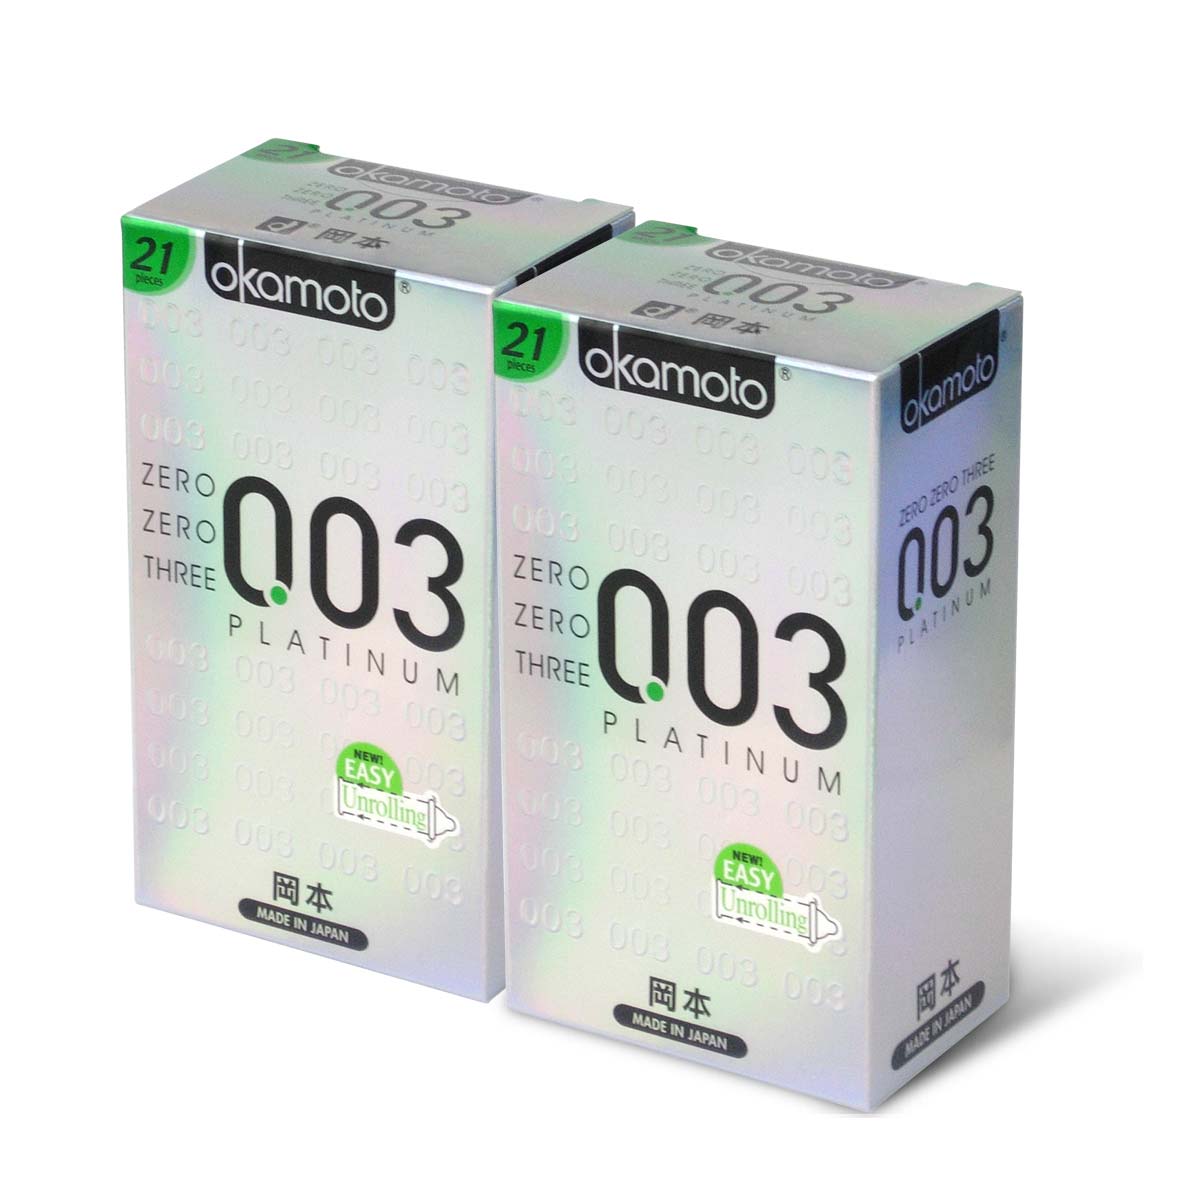 Okamoto 0.03 Platinum 21s Twin Pack Set 42 pieces condom-p_1